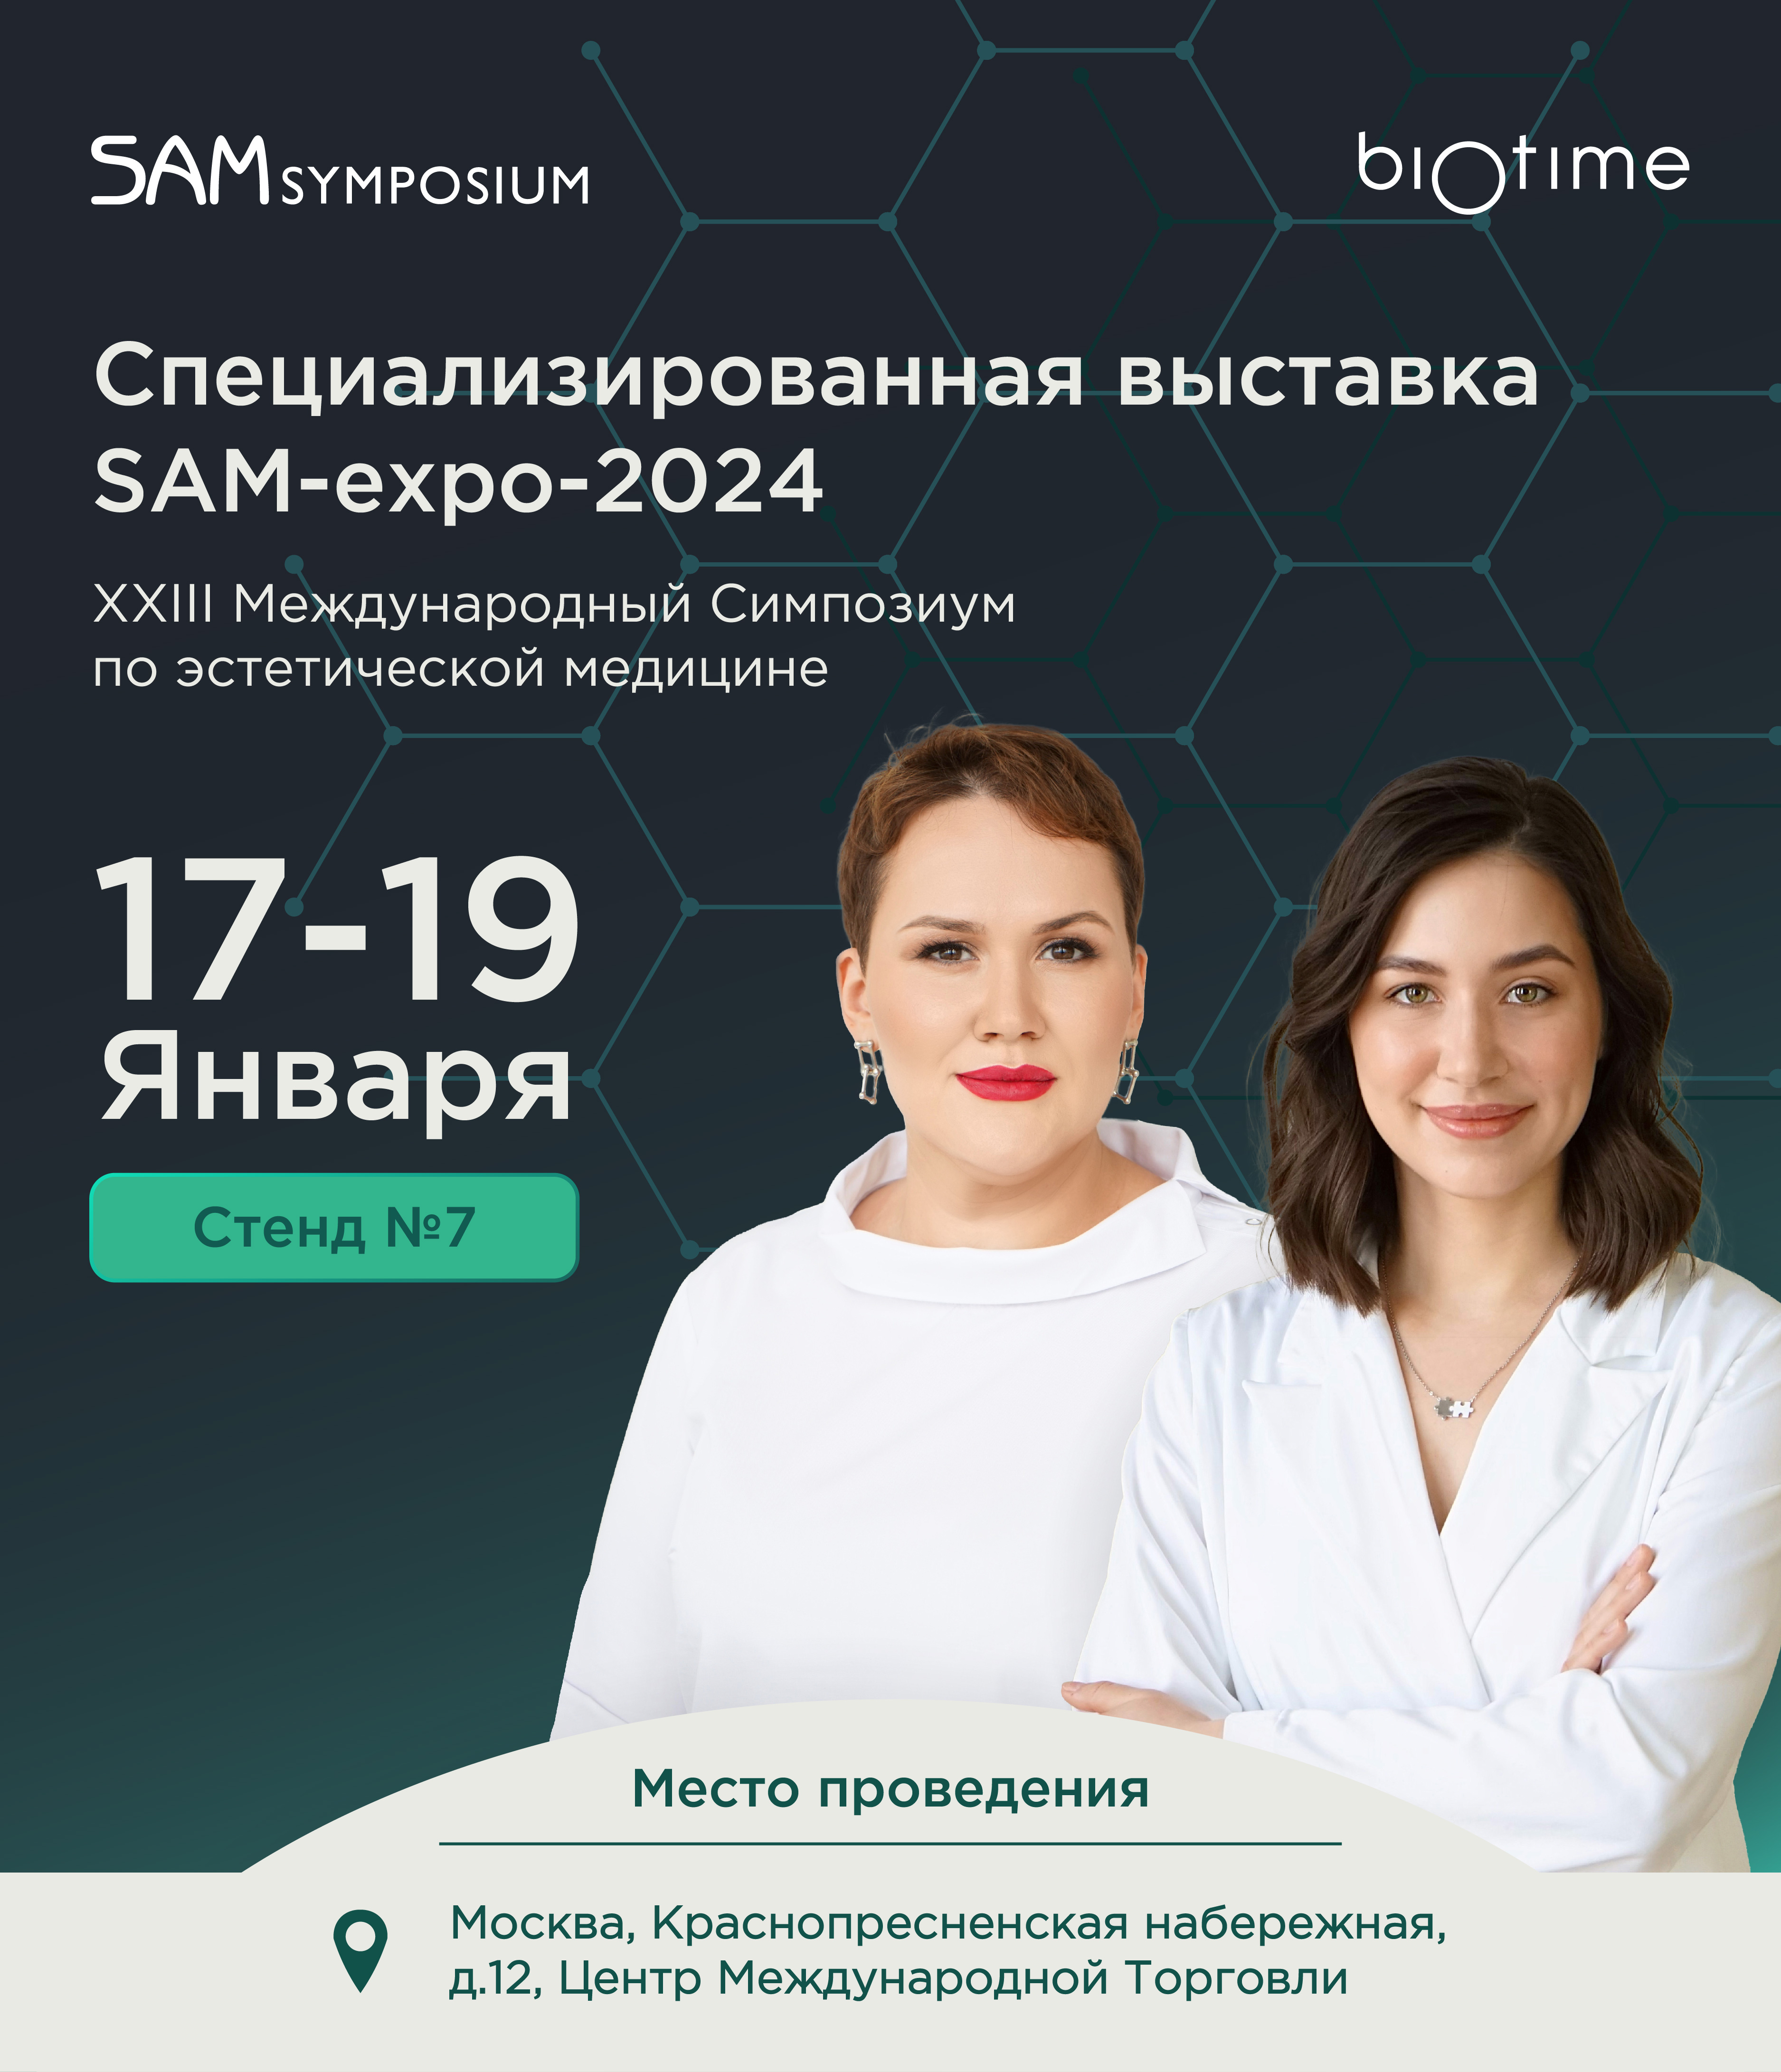 Biotime на выставке SAM-expo-2024